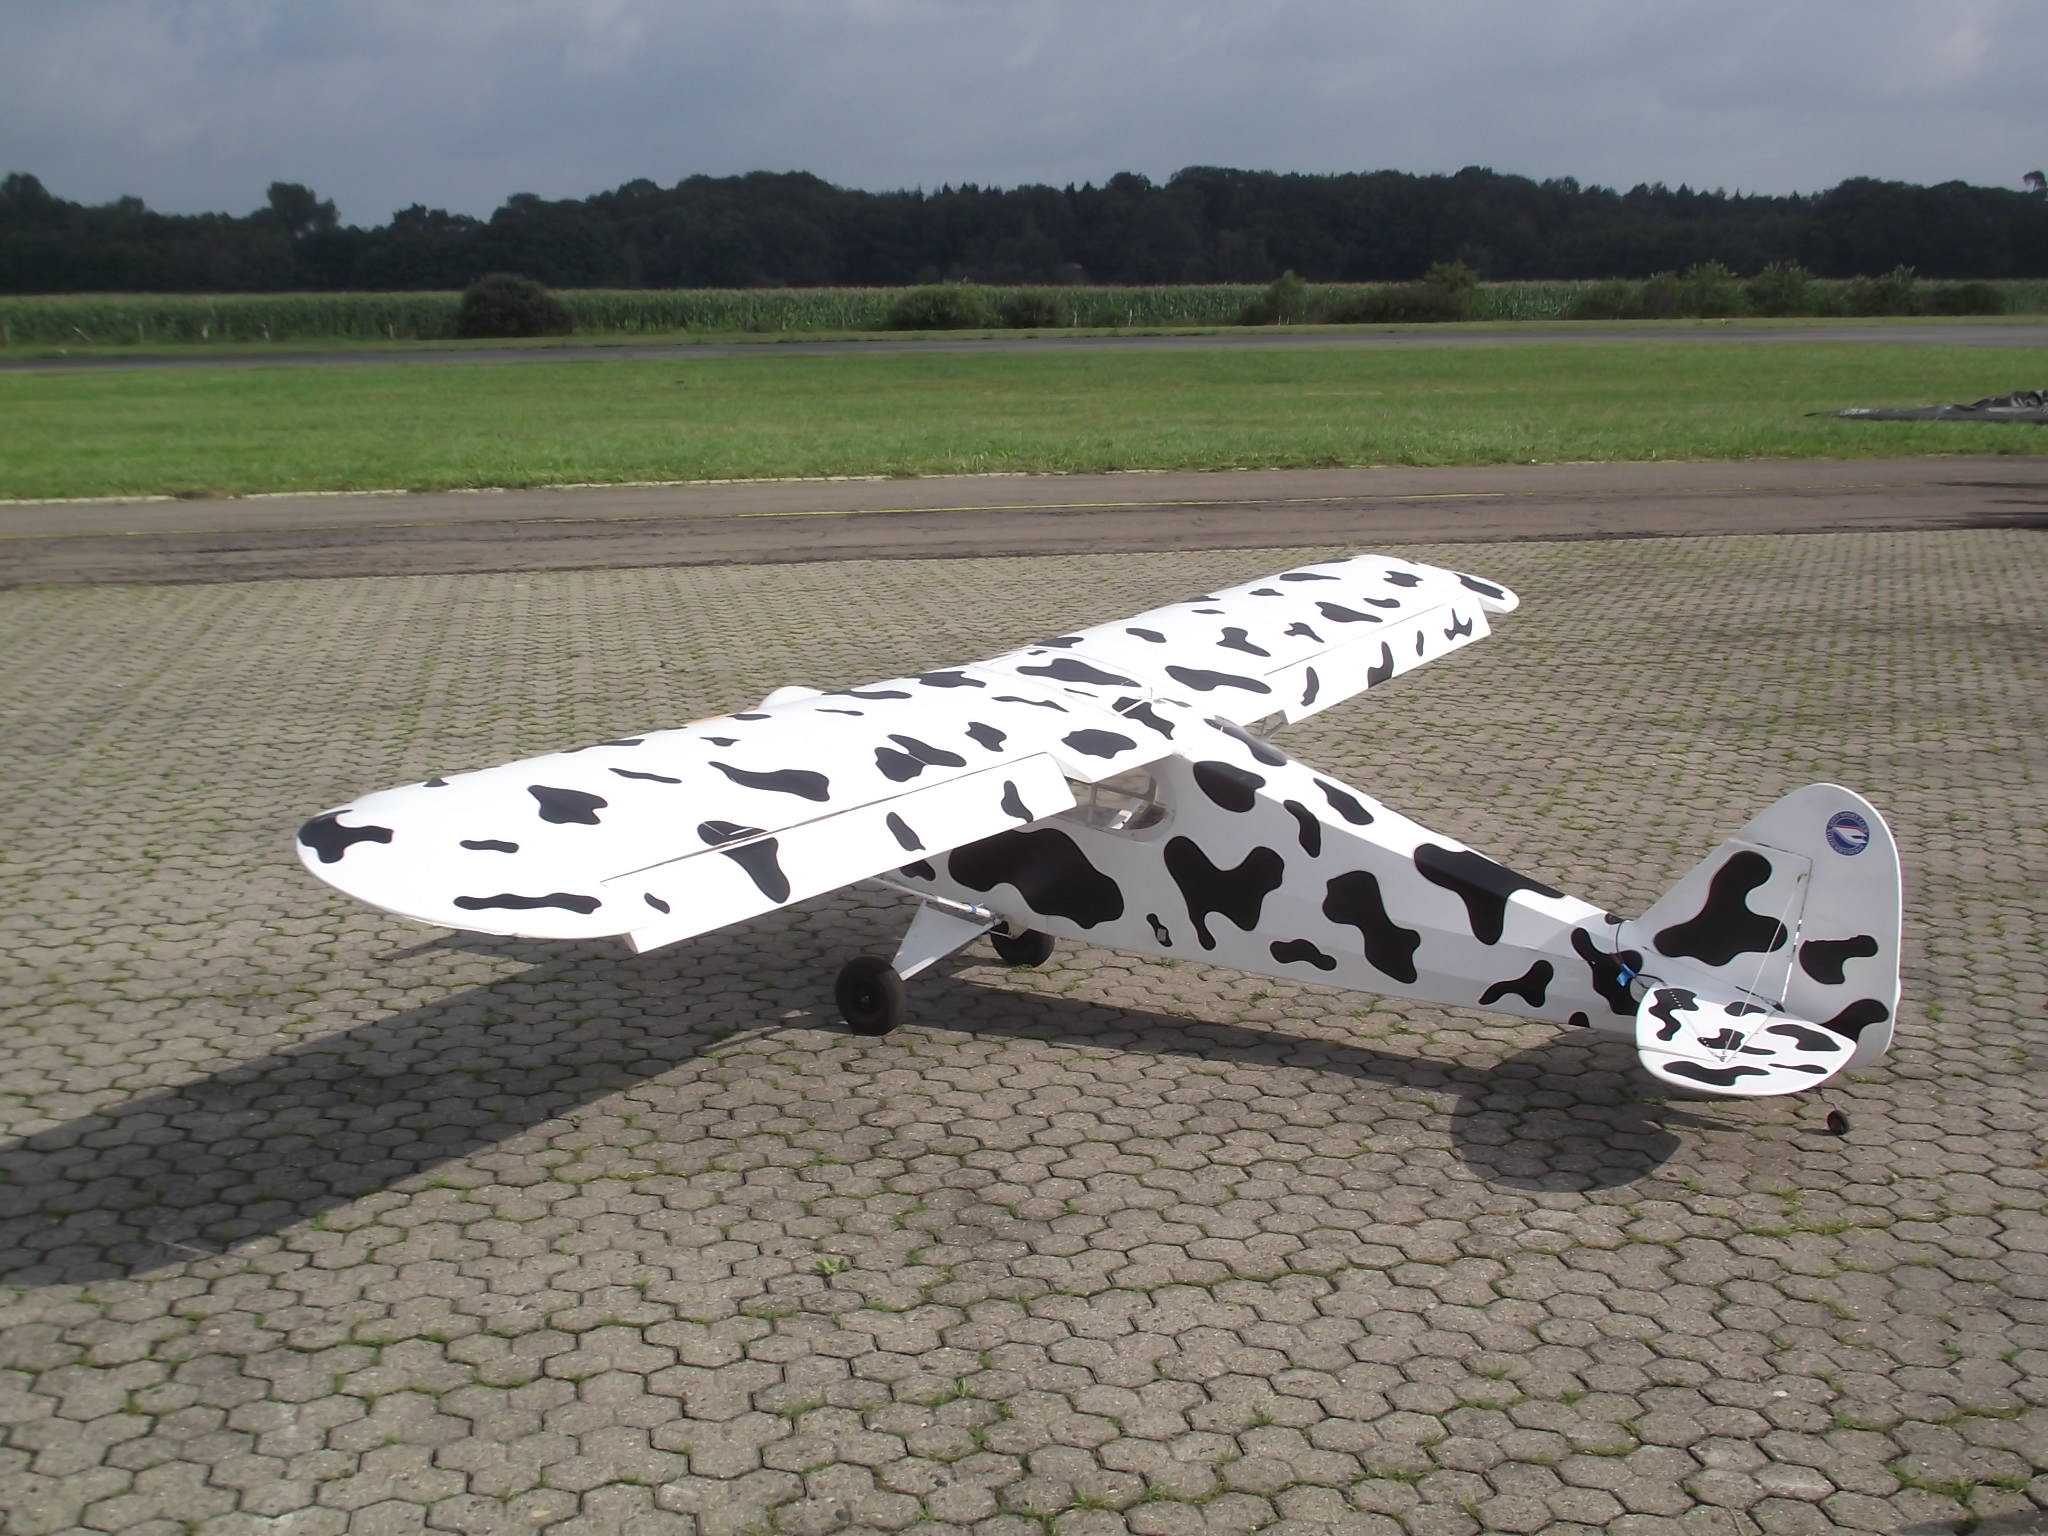 Jet-Flugtage in Ganderkesee - hier werden die Modelle präsentiert - Kuhflecken?